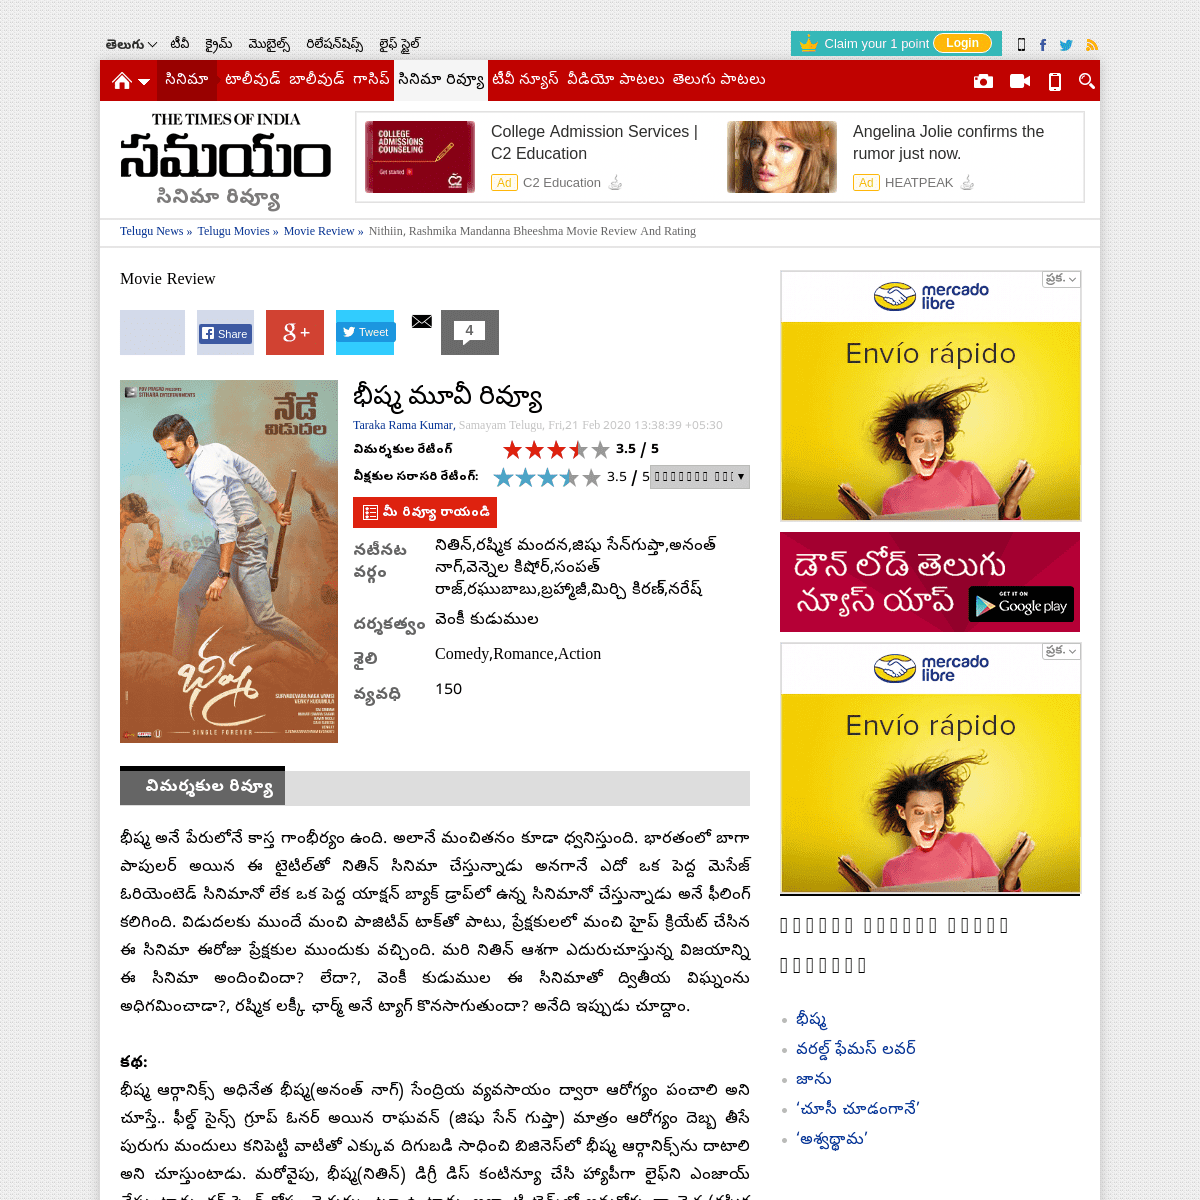 A complete backup of telugu.samayam.com/telugu-movies/movie-review/nithiin-rashmika-mandanna-bheeshma-movie-review-and-rating/mo